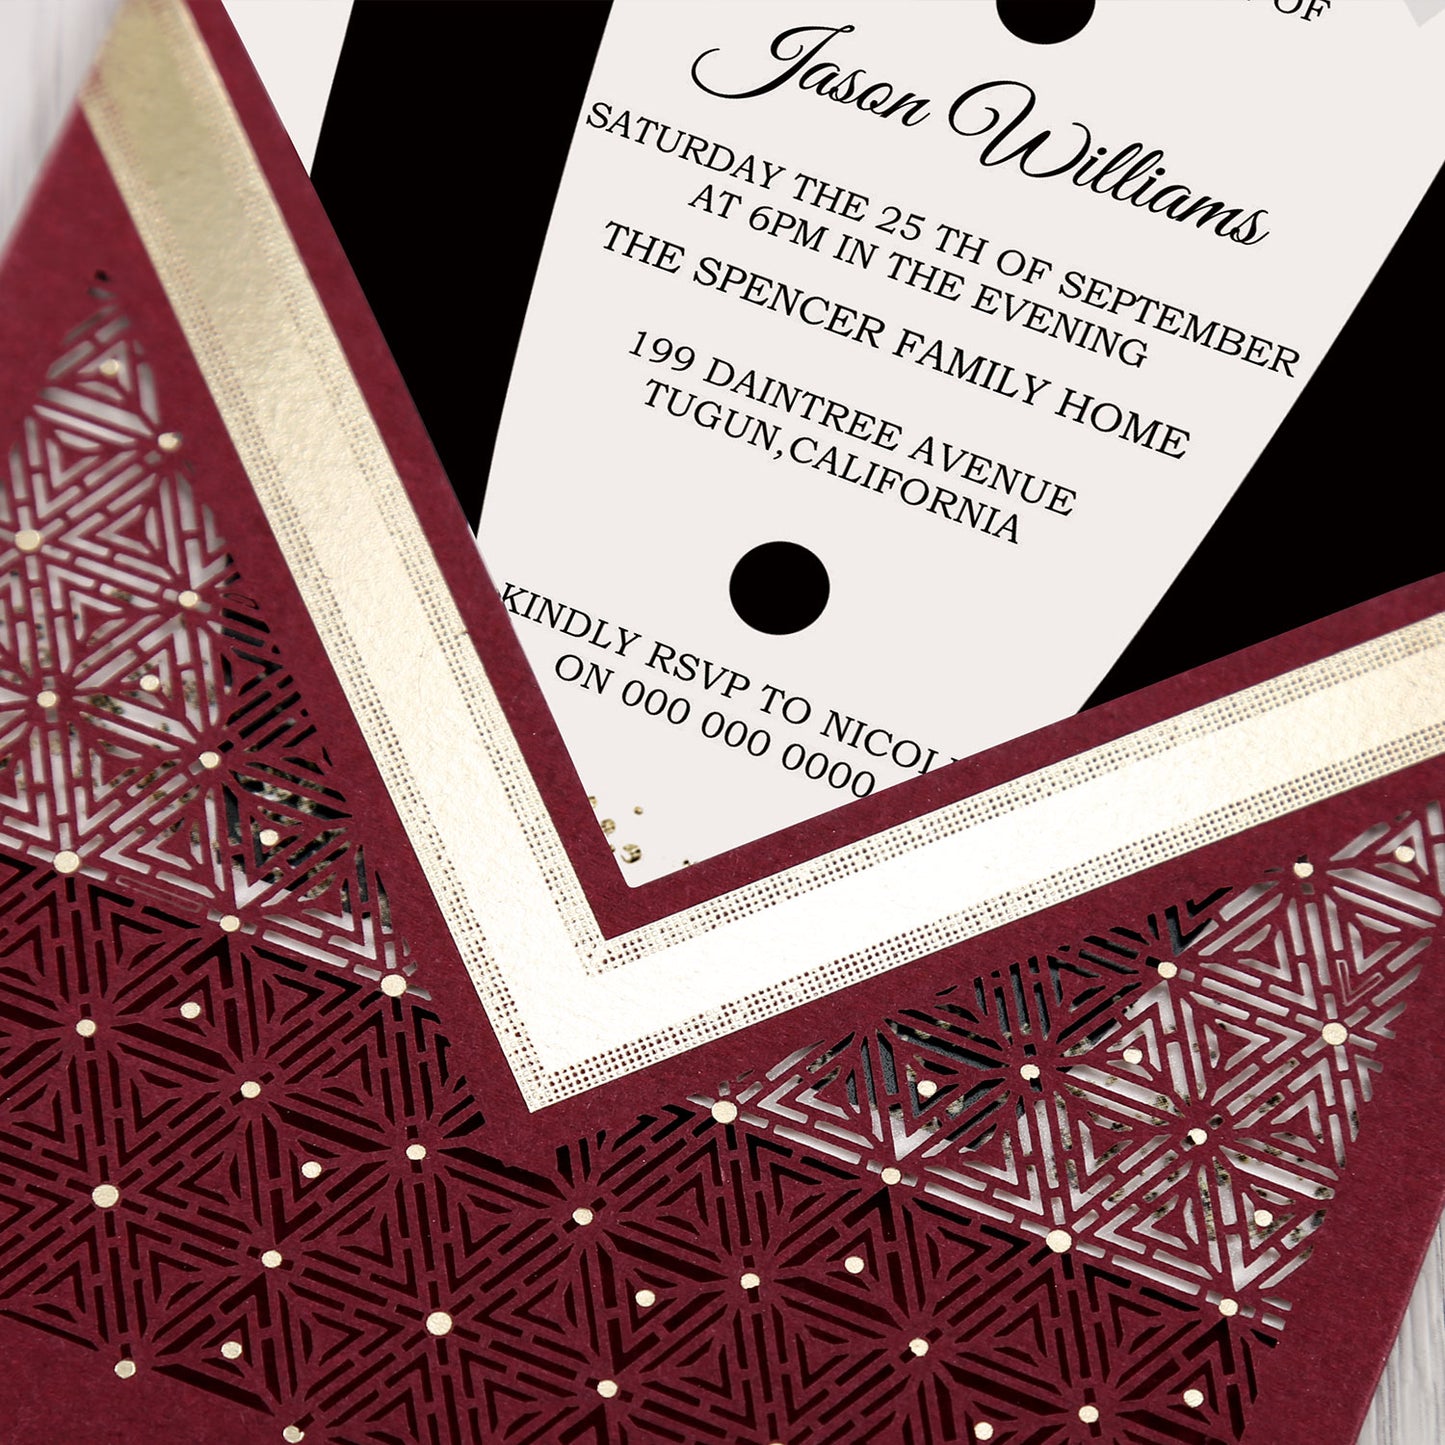 Burgundy Floral Laser cut invitation cards for Wedding, Anniversary, Quinceanera, Birthday